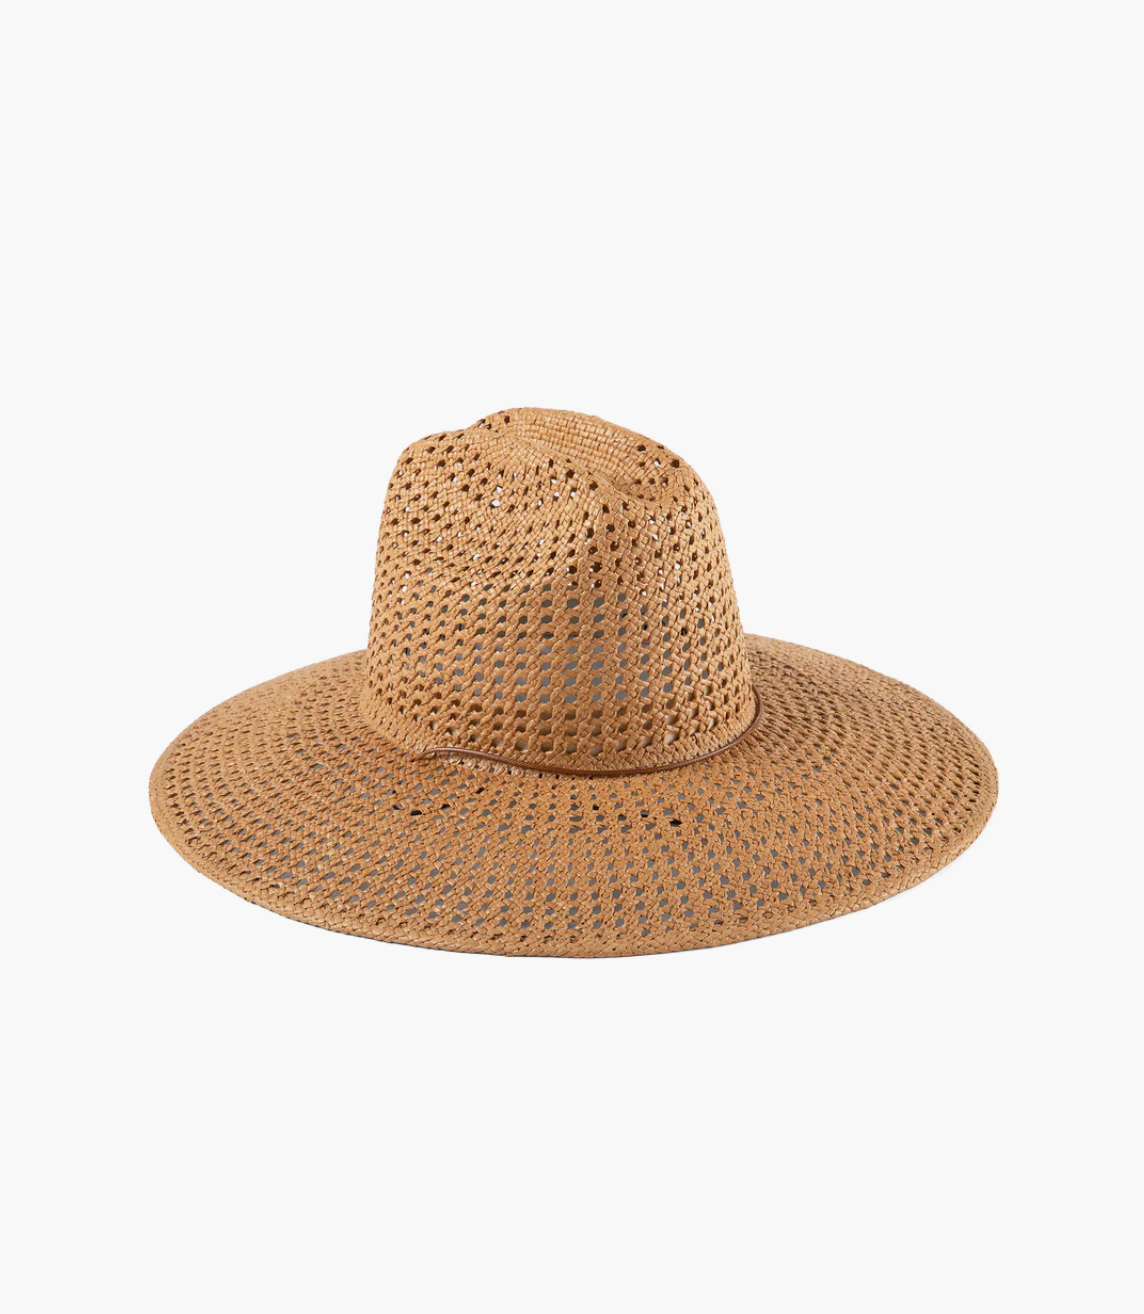 The Vista Hat